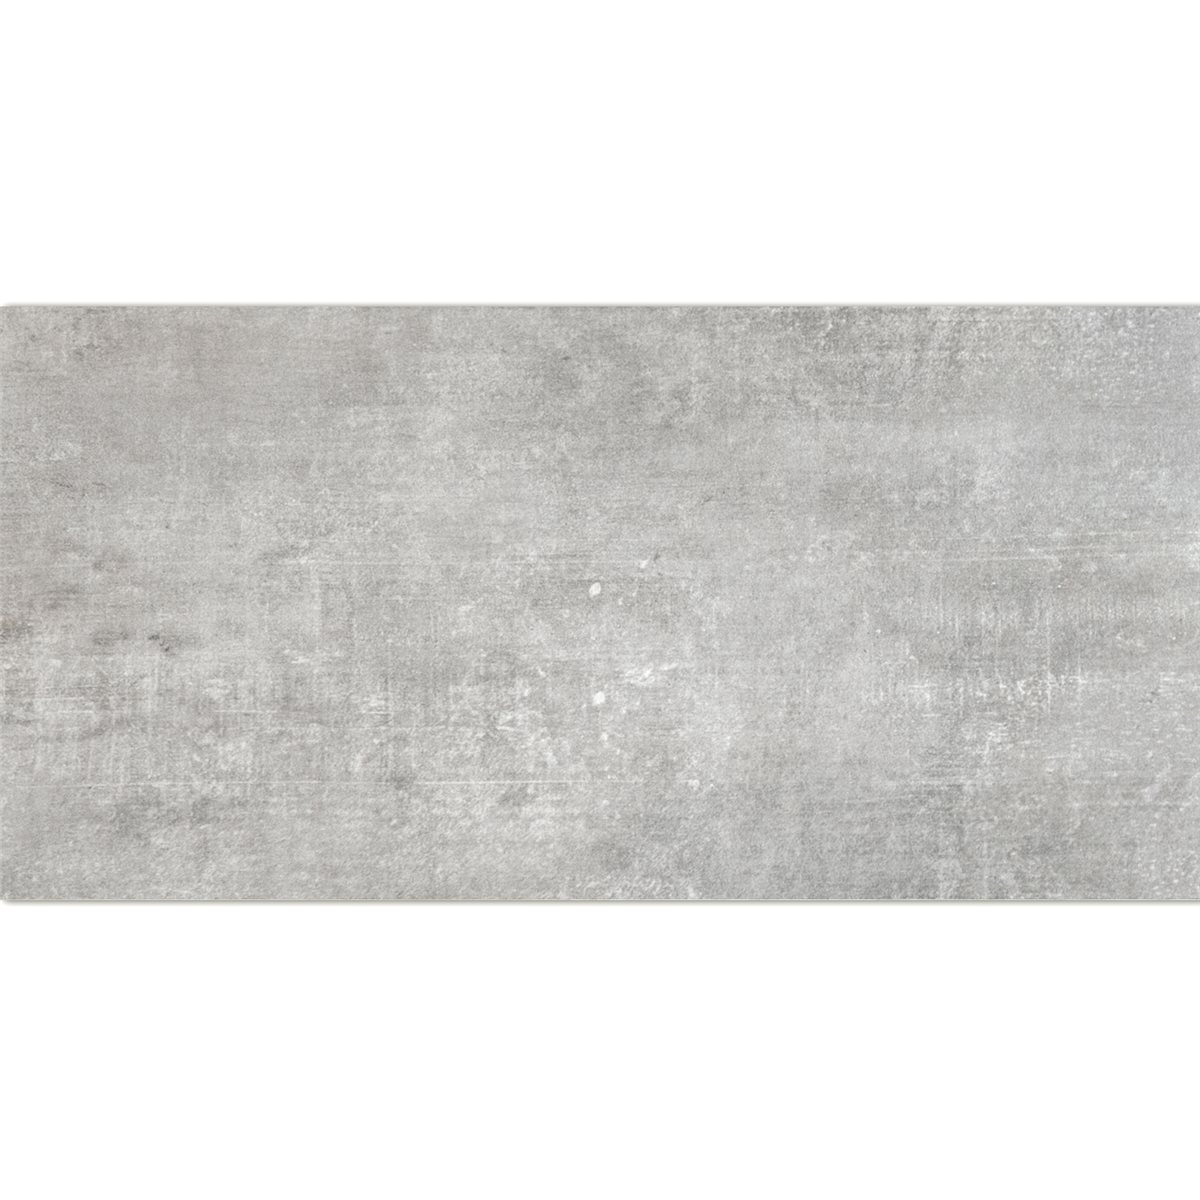 Bodenfliesen Tansania Glasiert Grau 30x60cm